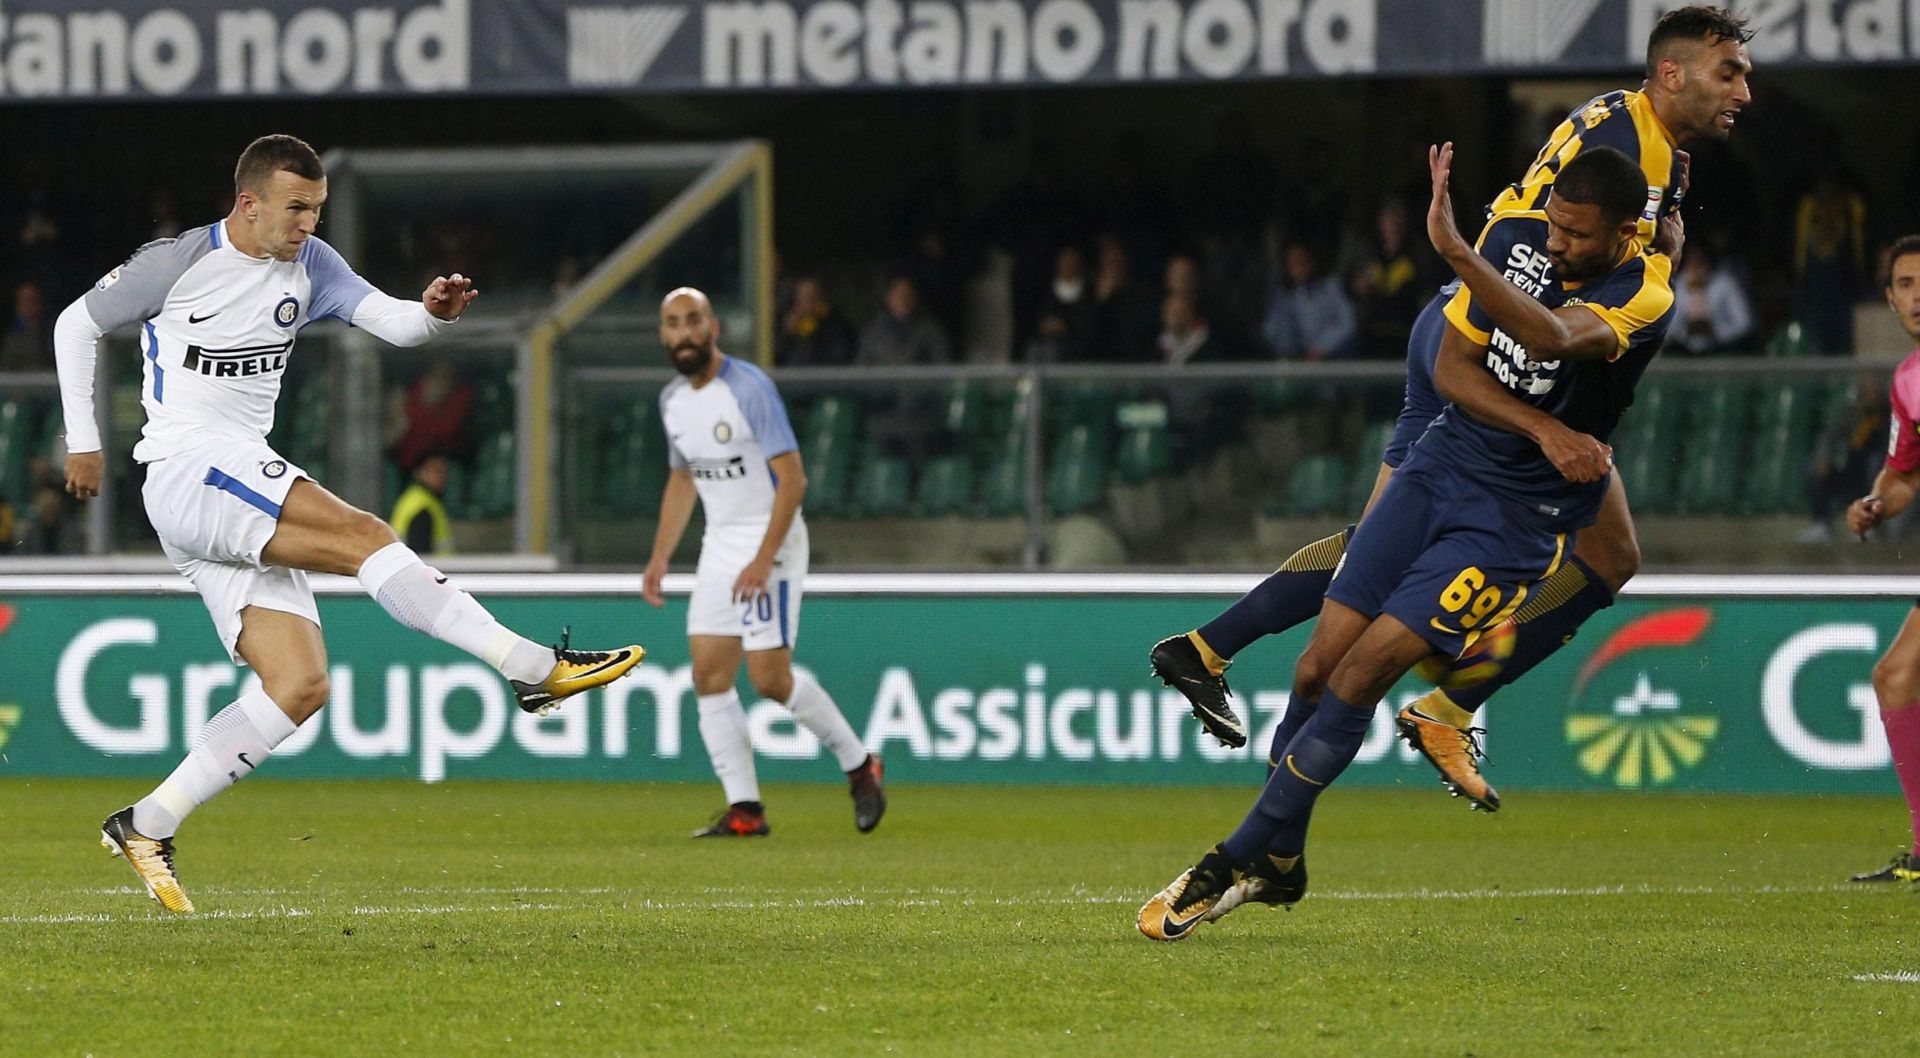 epa06298964 Inter's Ivan Perisic (L) scores a goal during the Italian Serie A soccer match between Hellas Verona FC and Inter FC at Bentegodi stadium in Verona, Italy, 30 October 2017.  EPA/SIMONE VENEZIA